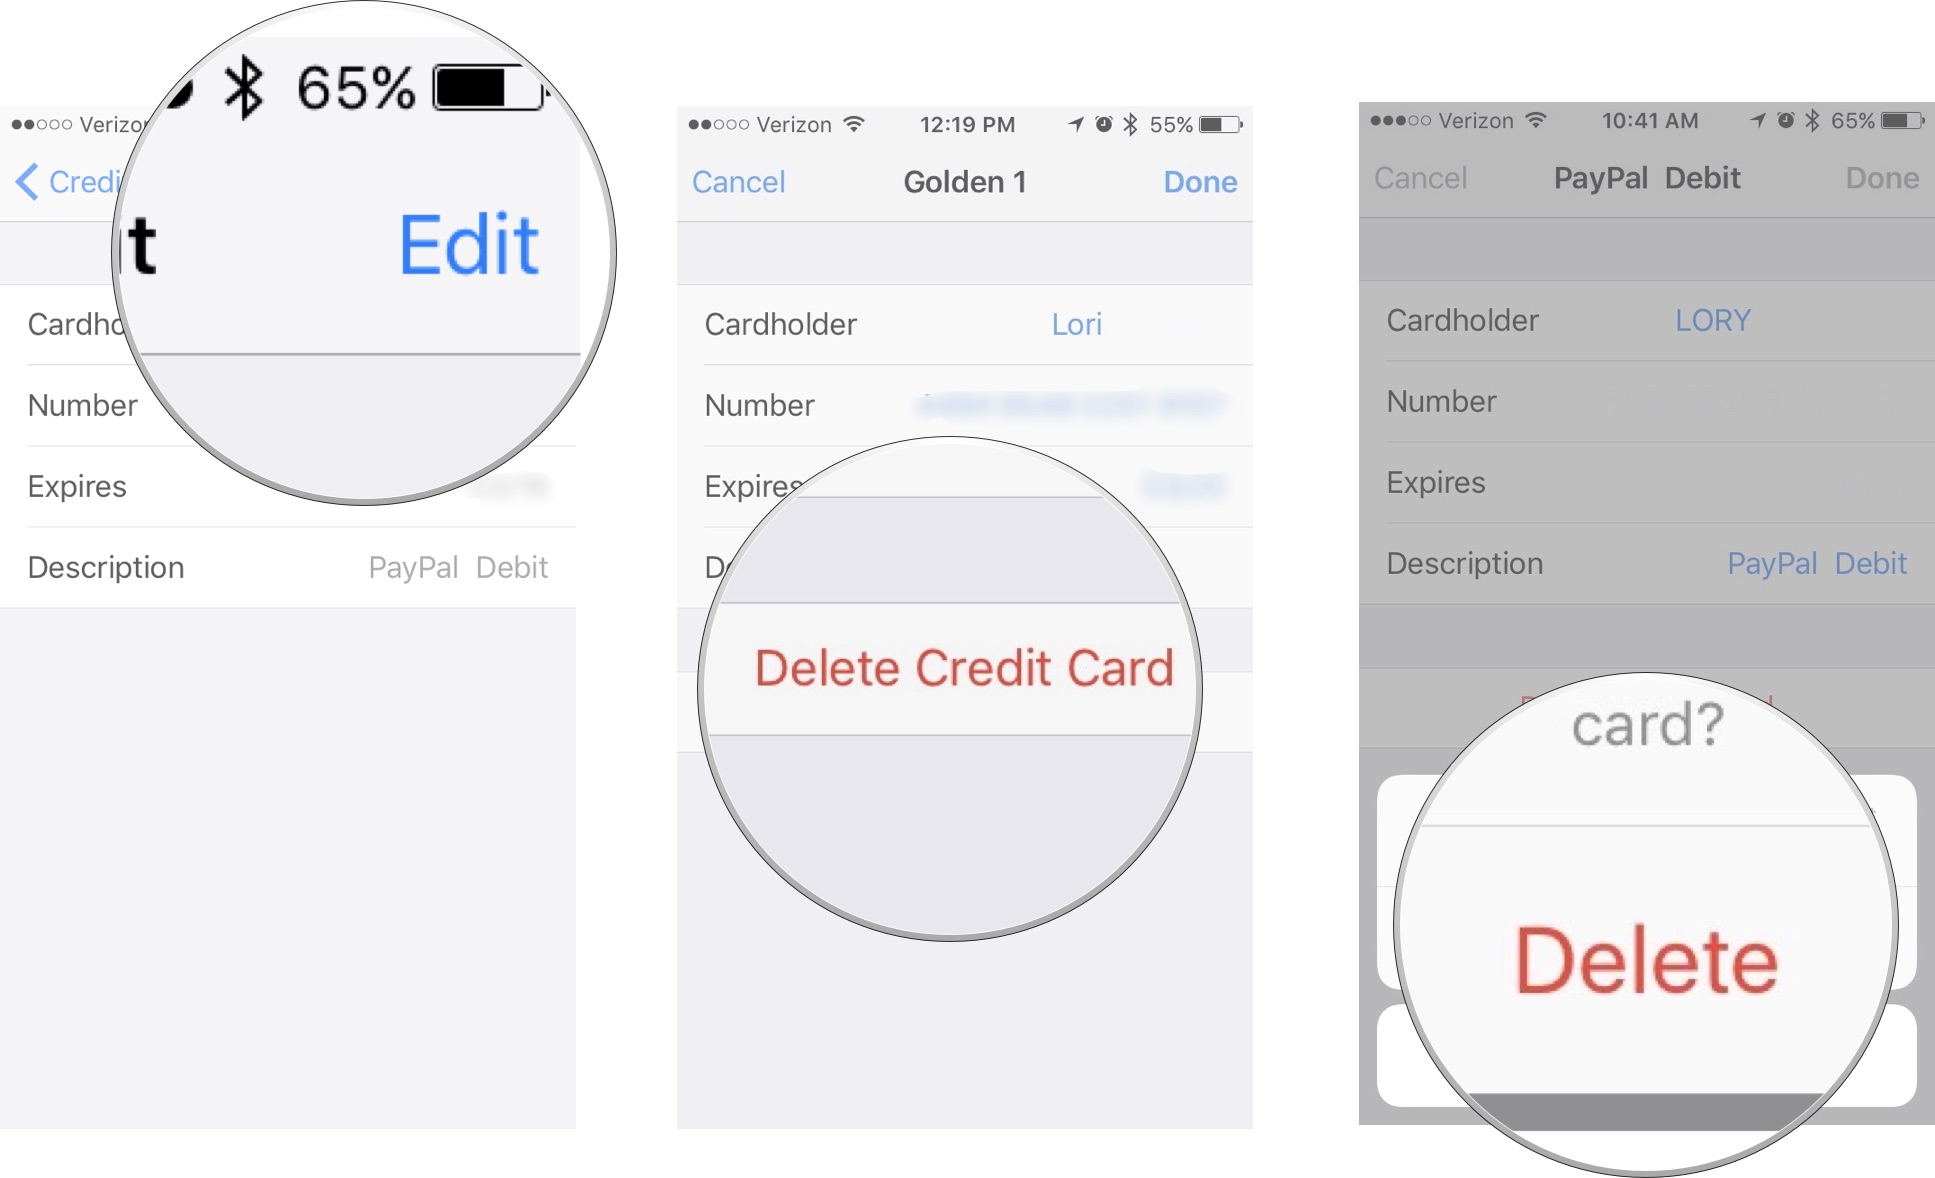 Tap Edit, then tap Delete Credit Card, then tap Delete